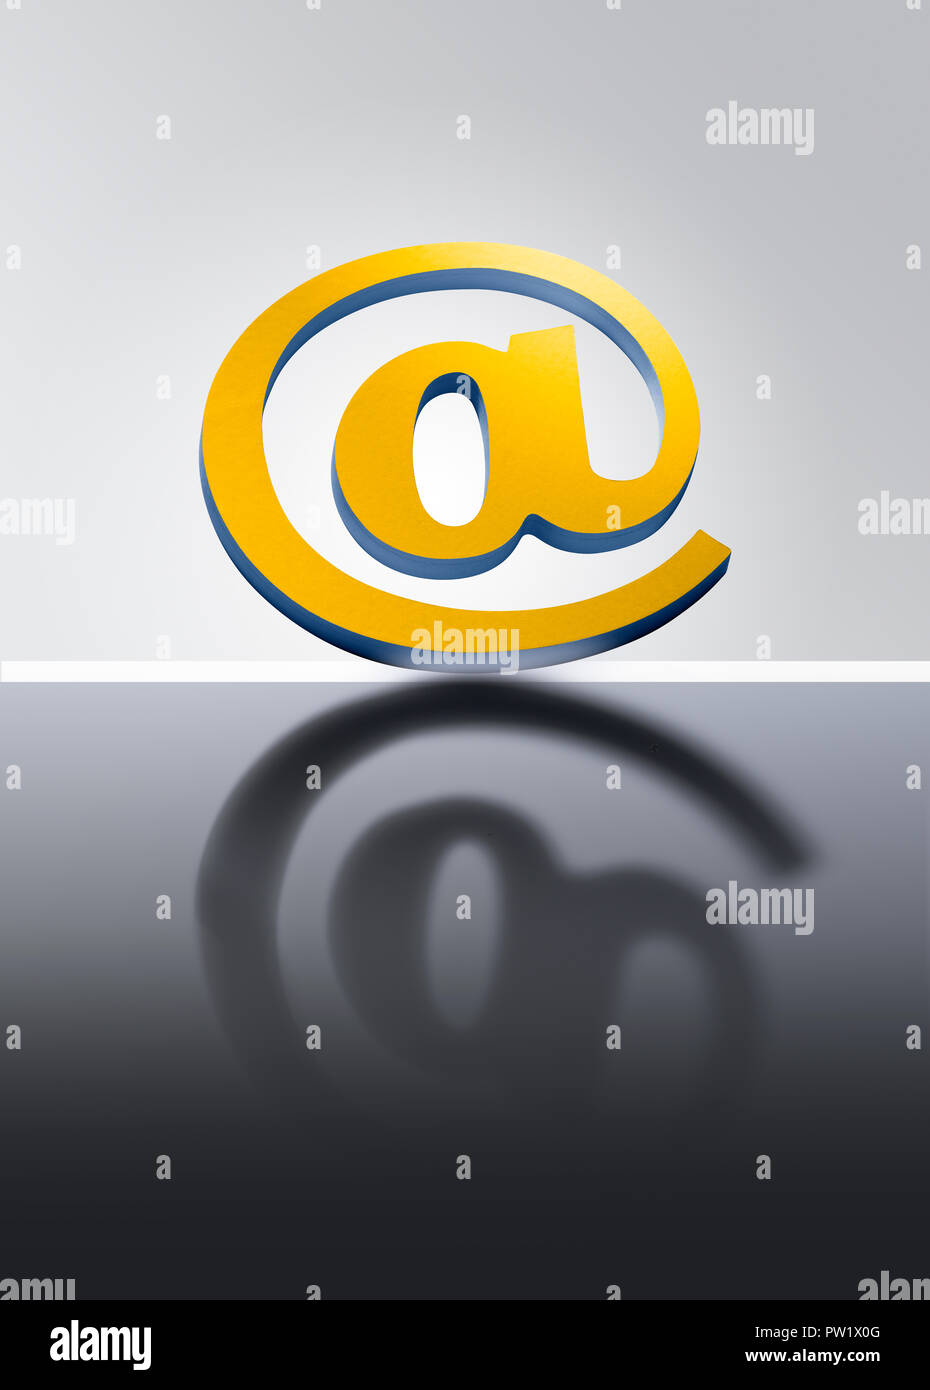 Concept @ At Sign Symbol, Internet Identity, Online ID, Internet Address Stock Photo